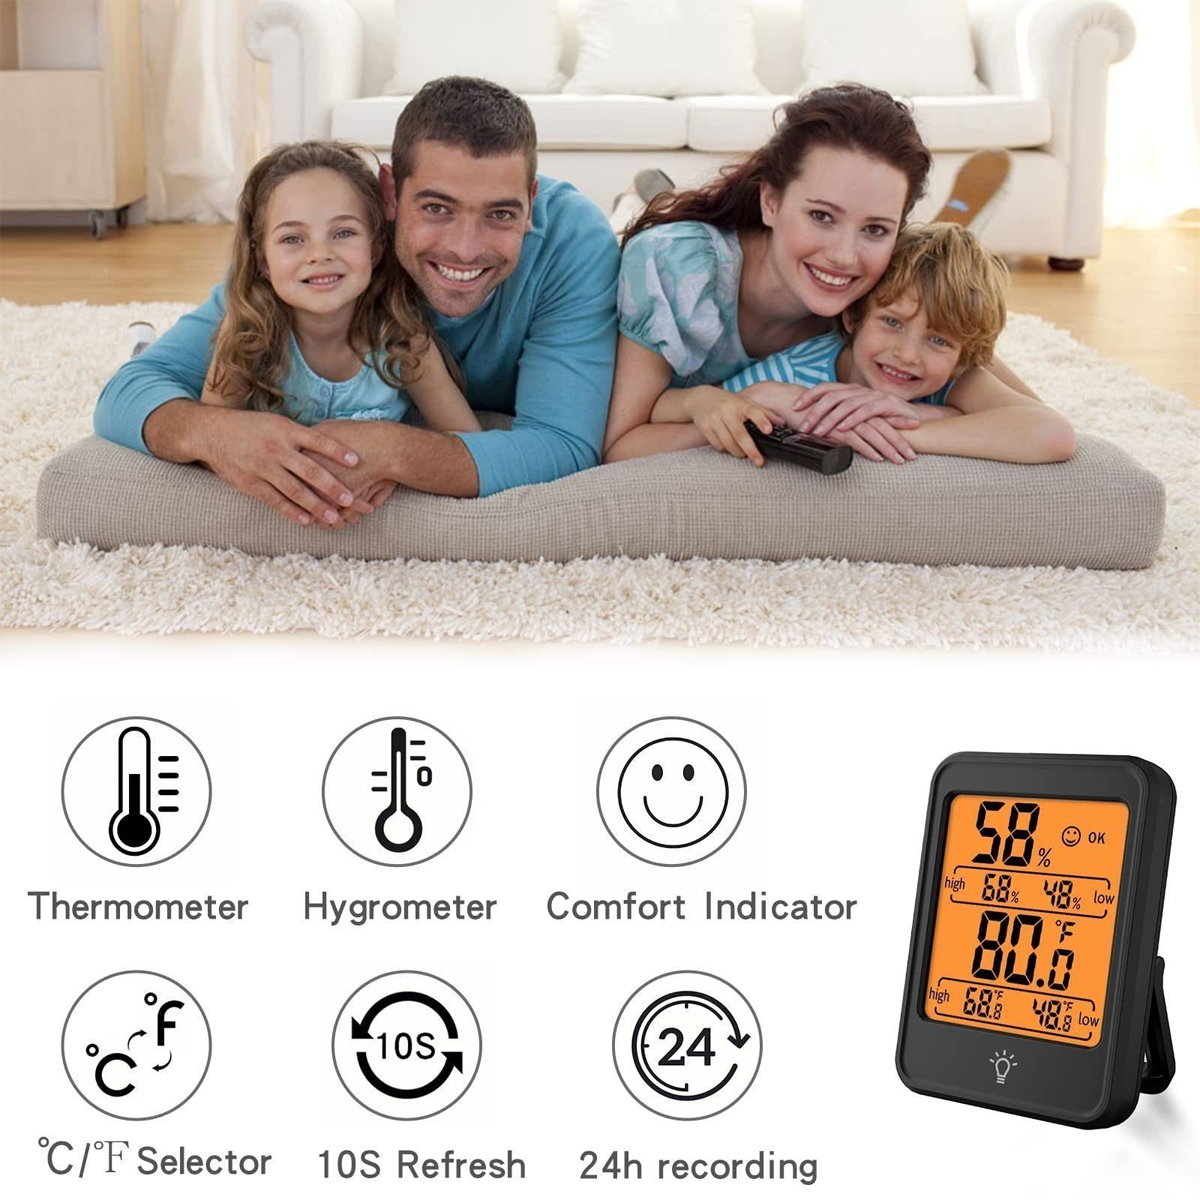 BABY JA Raumthermometer Digitales Hygrothermometer Thermometer,Hygrometer Hintergrundbeleuchtung mit Innen,Display